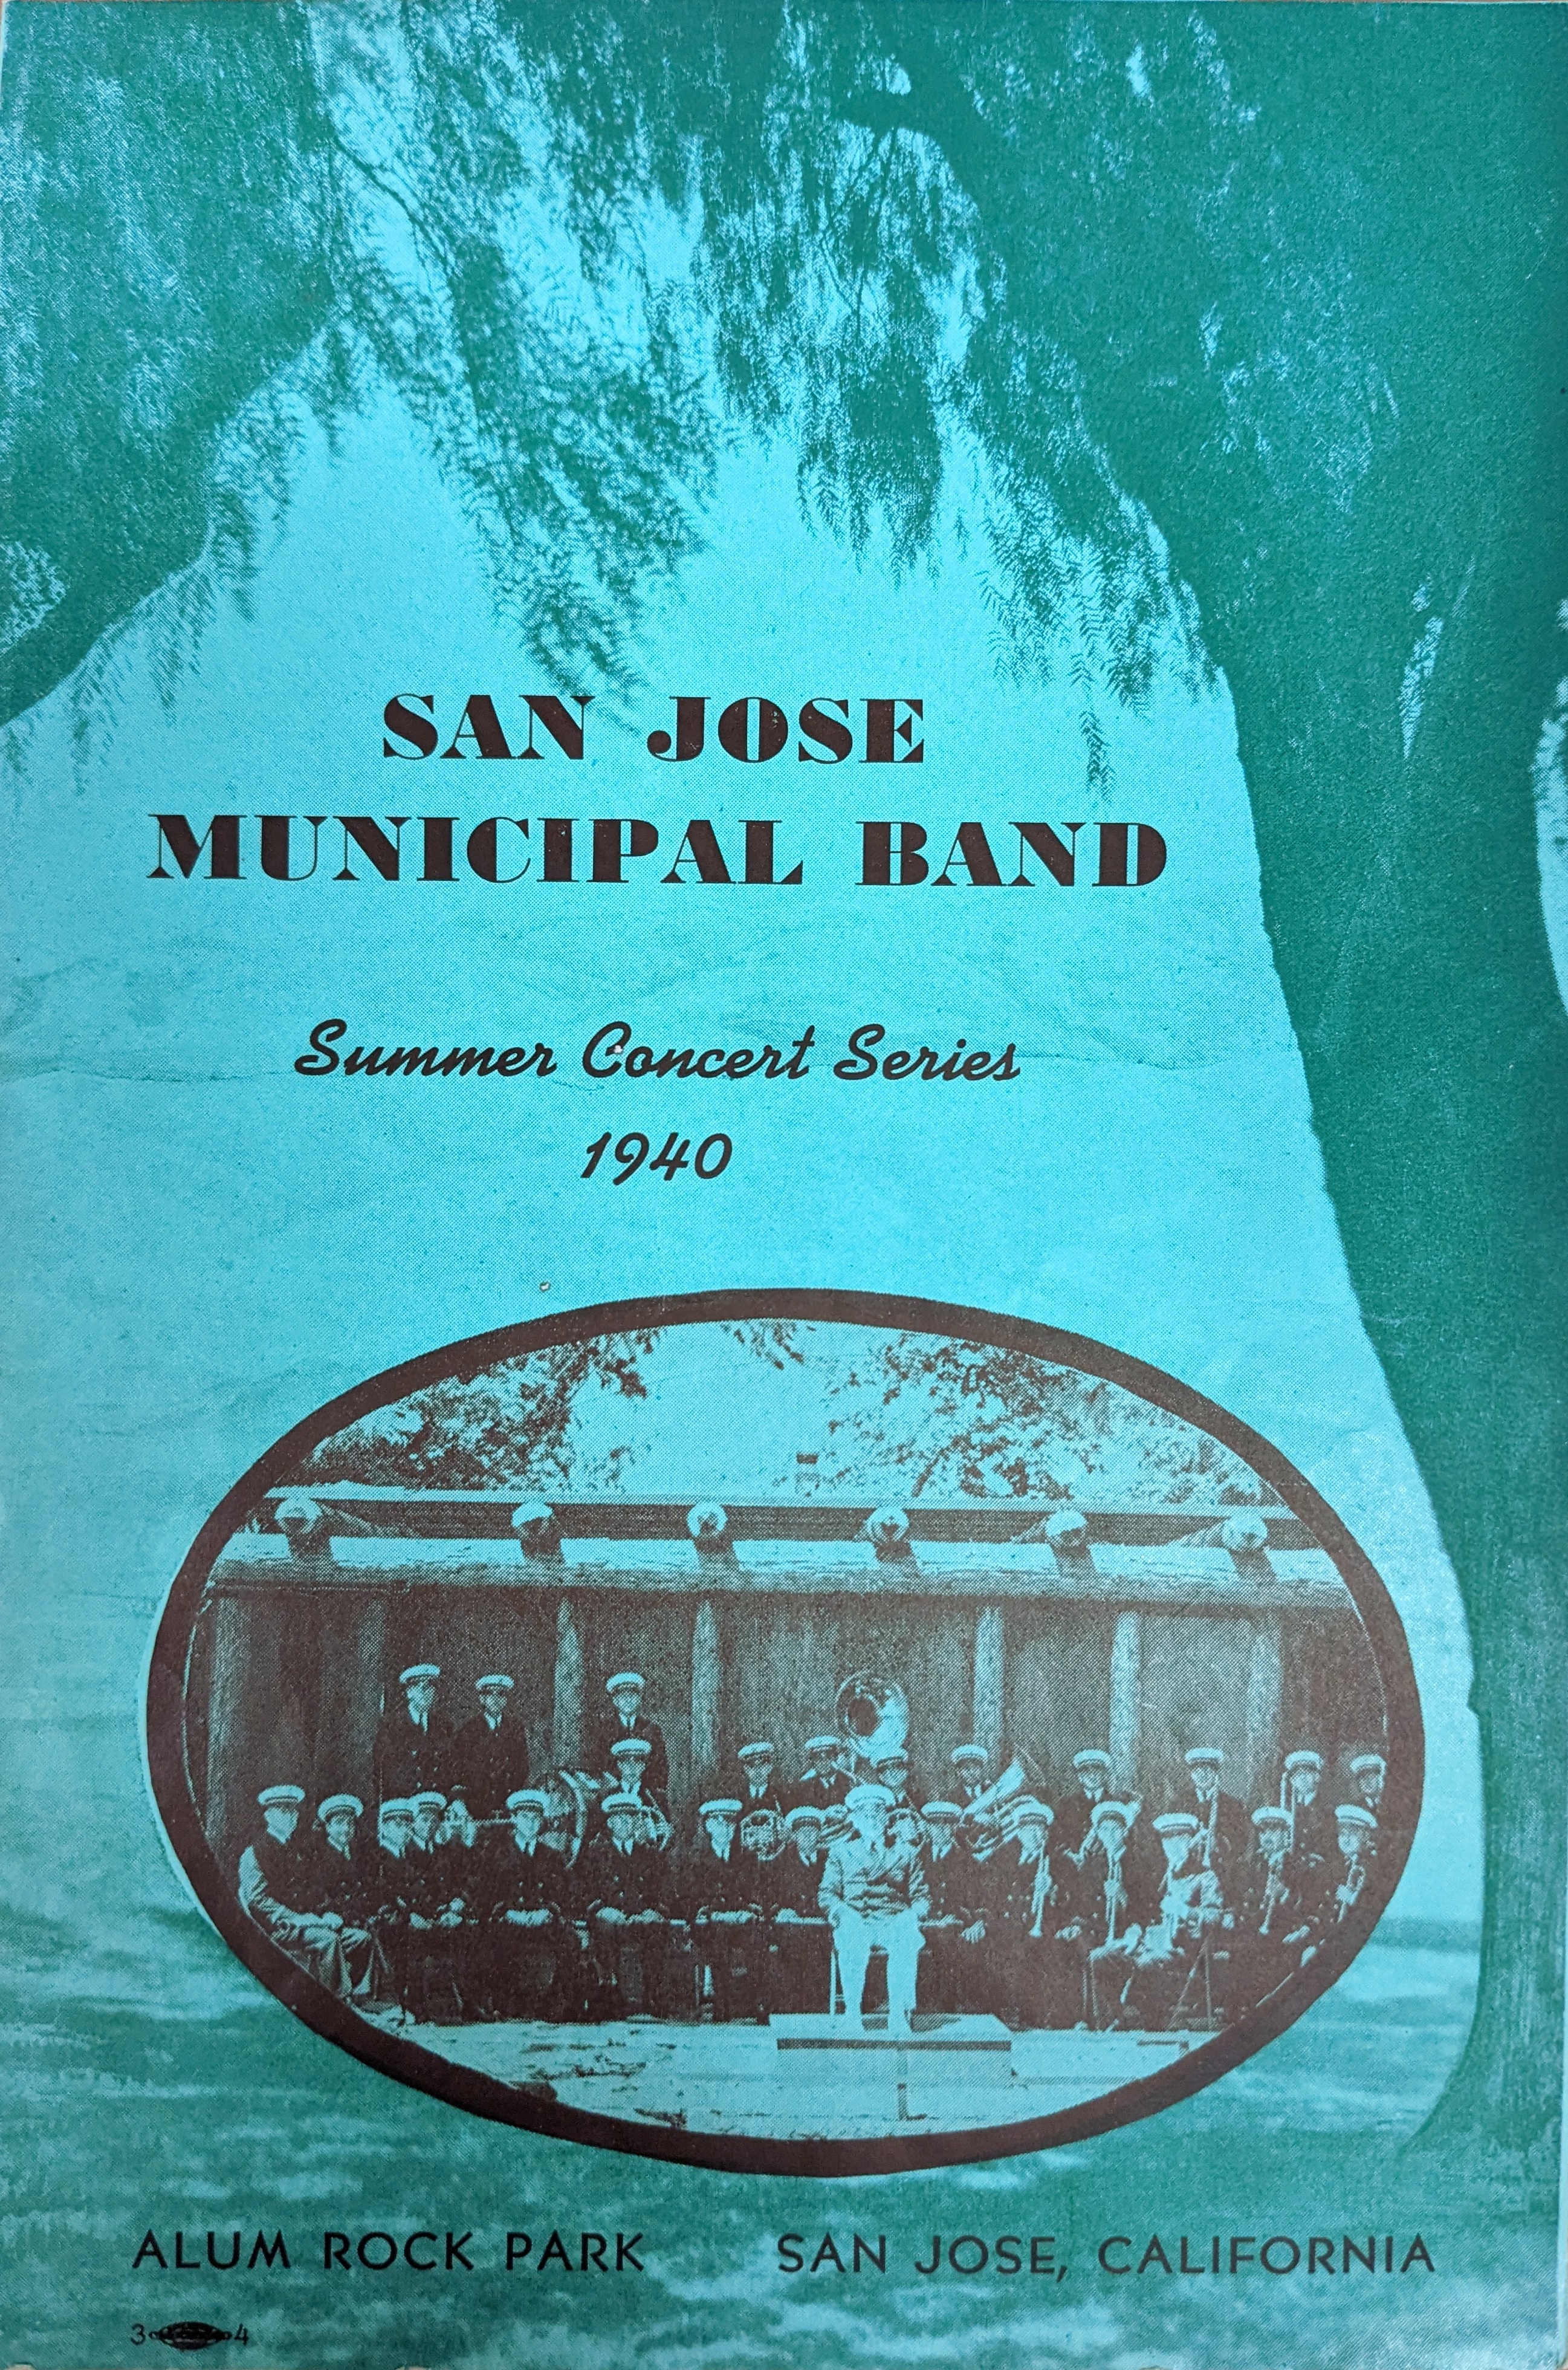 Cover of San Jose Municipal Band 1940 Summer Concert program